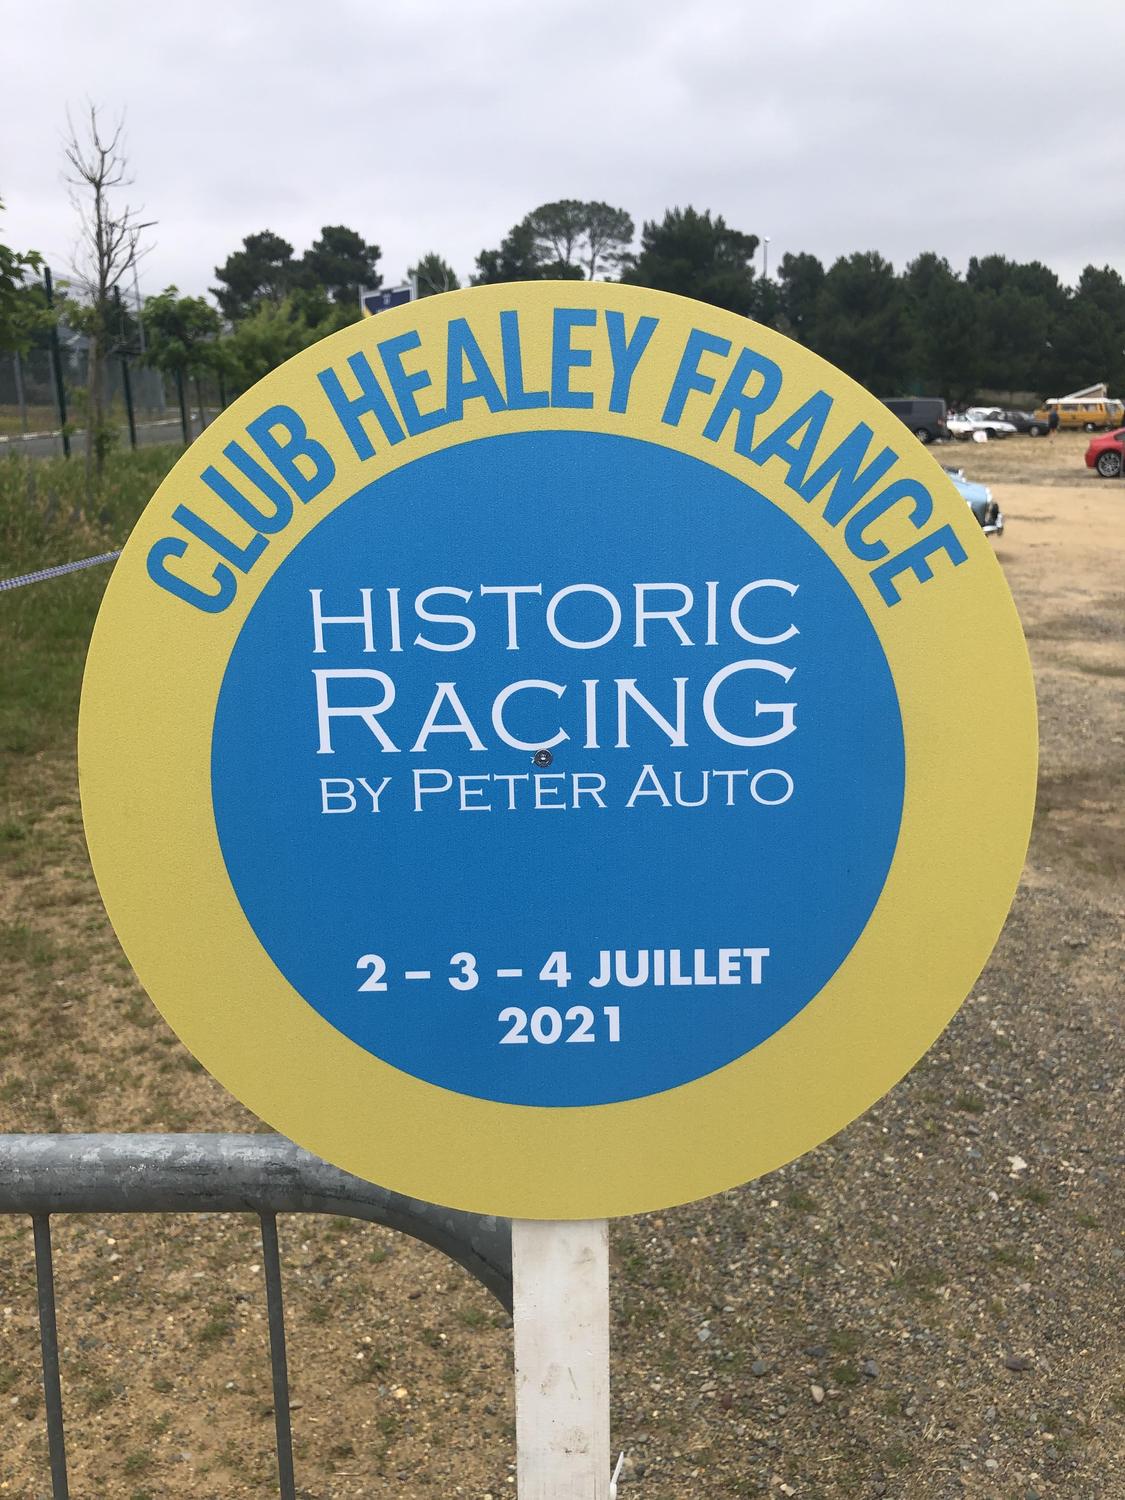 Historic Racing